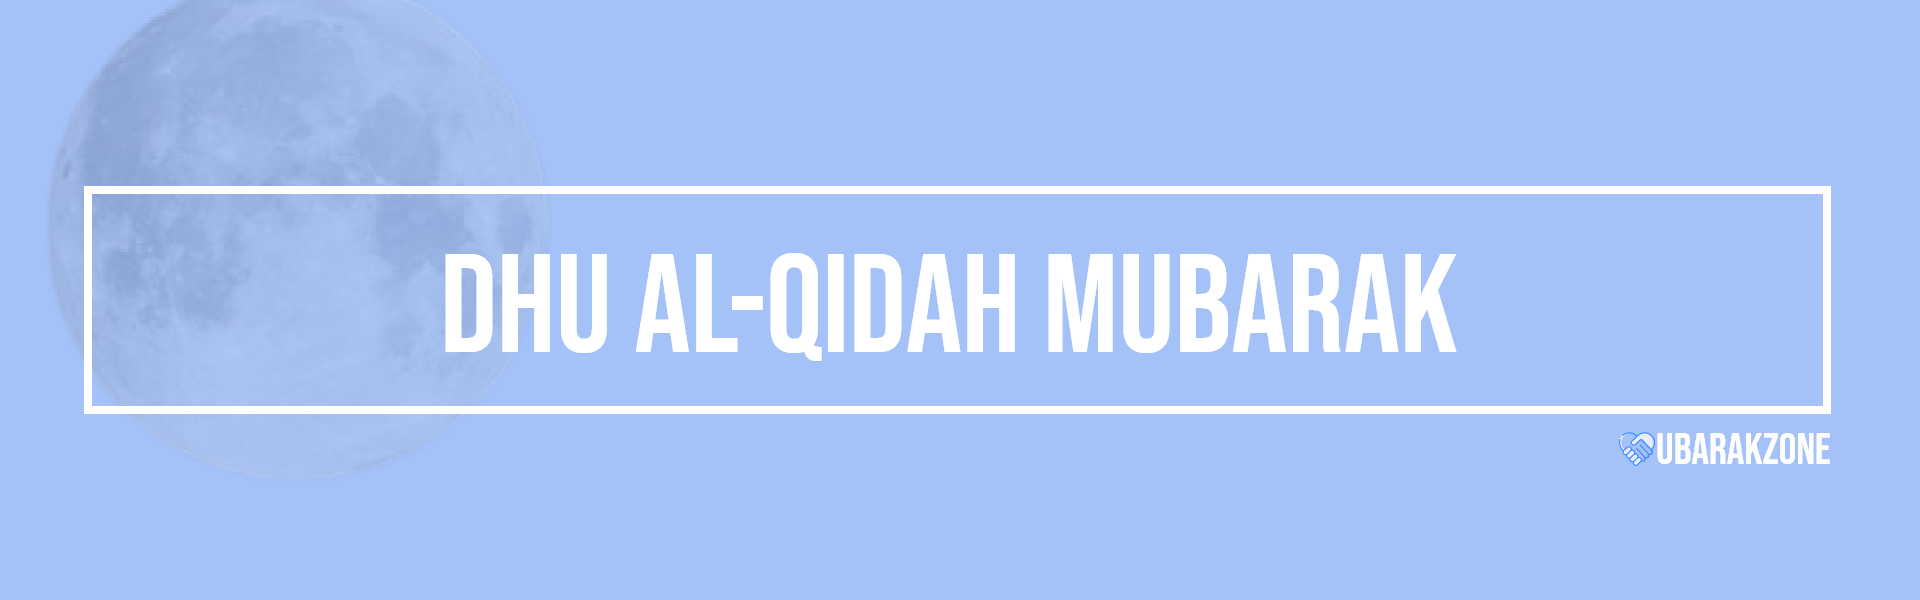 dhu al-qidah mubarak wishes messages